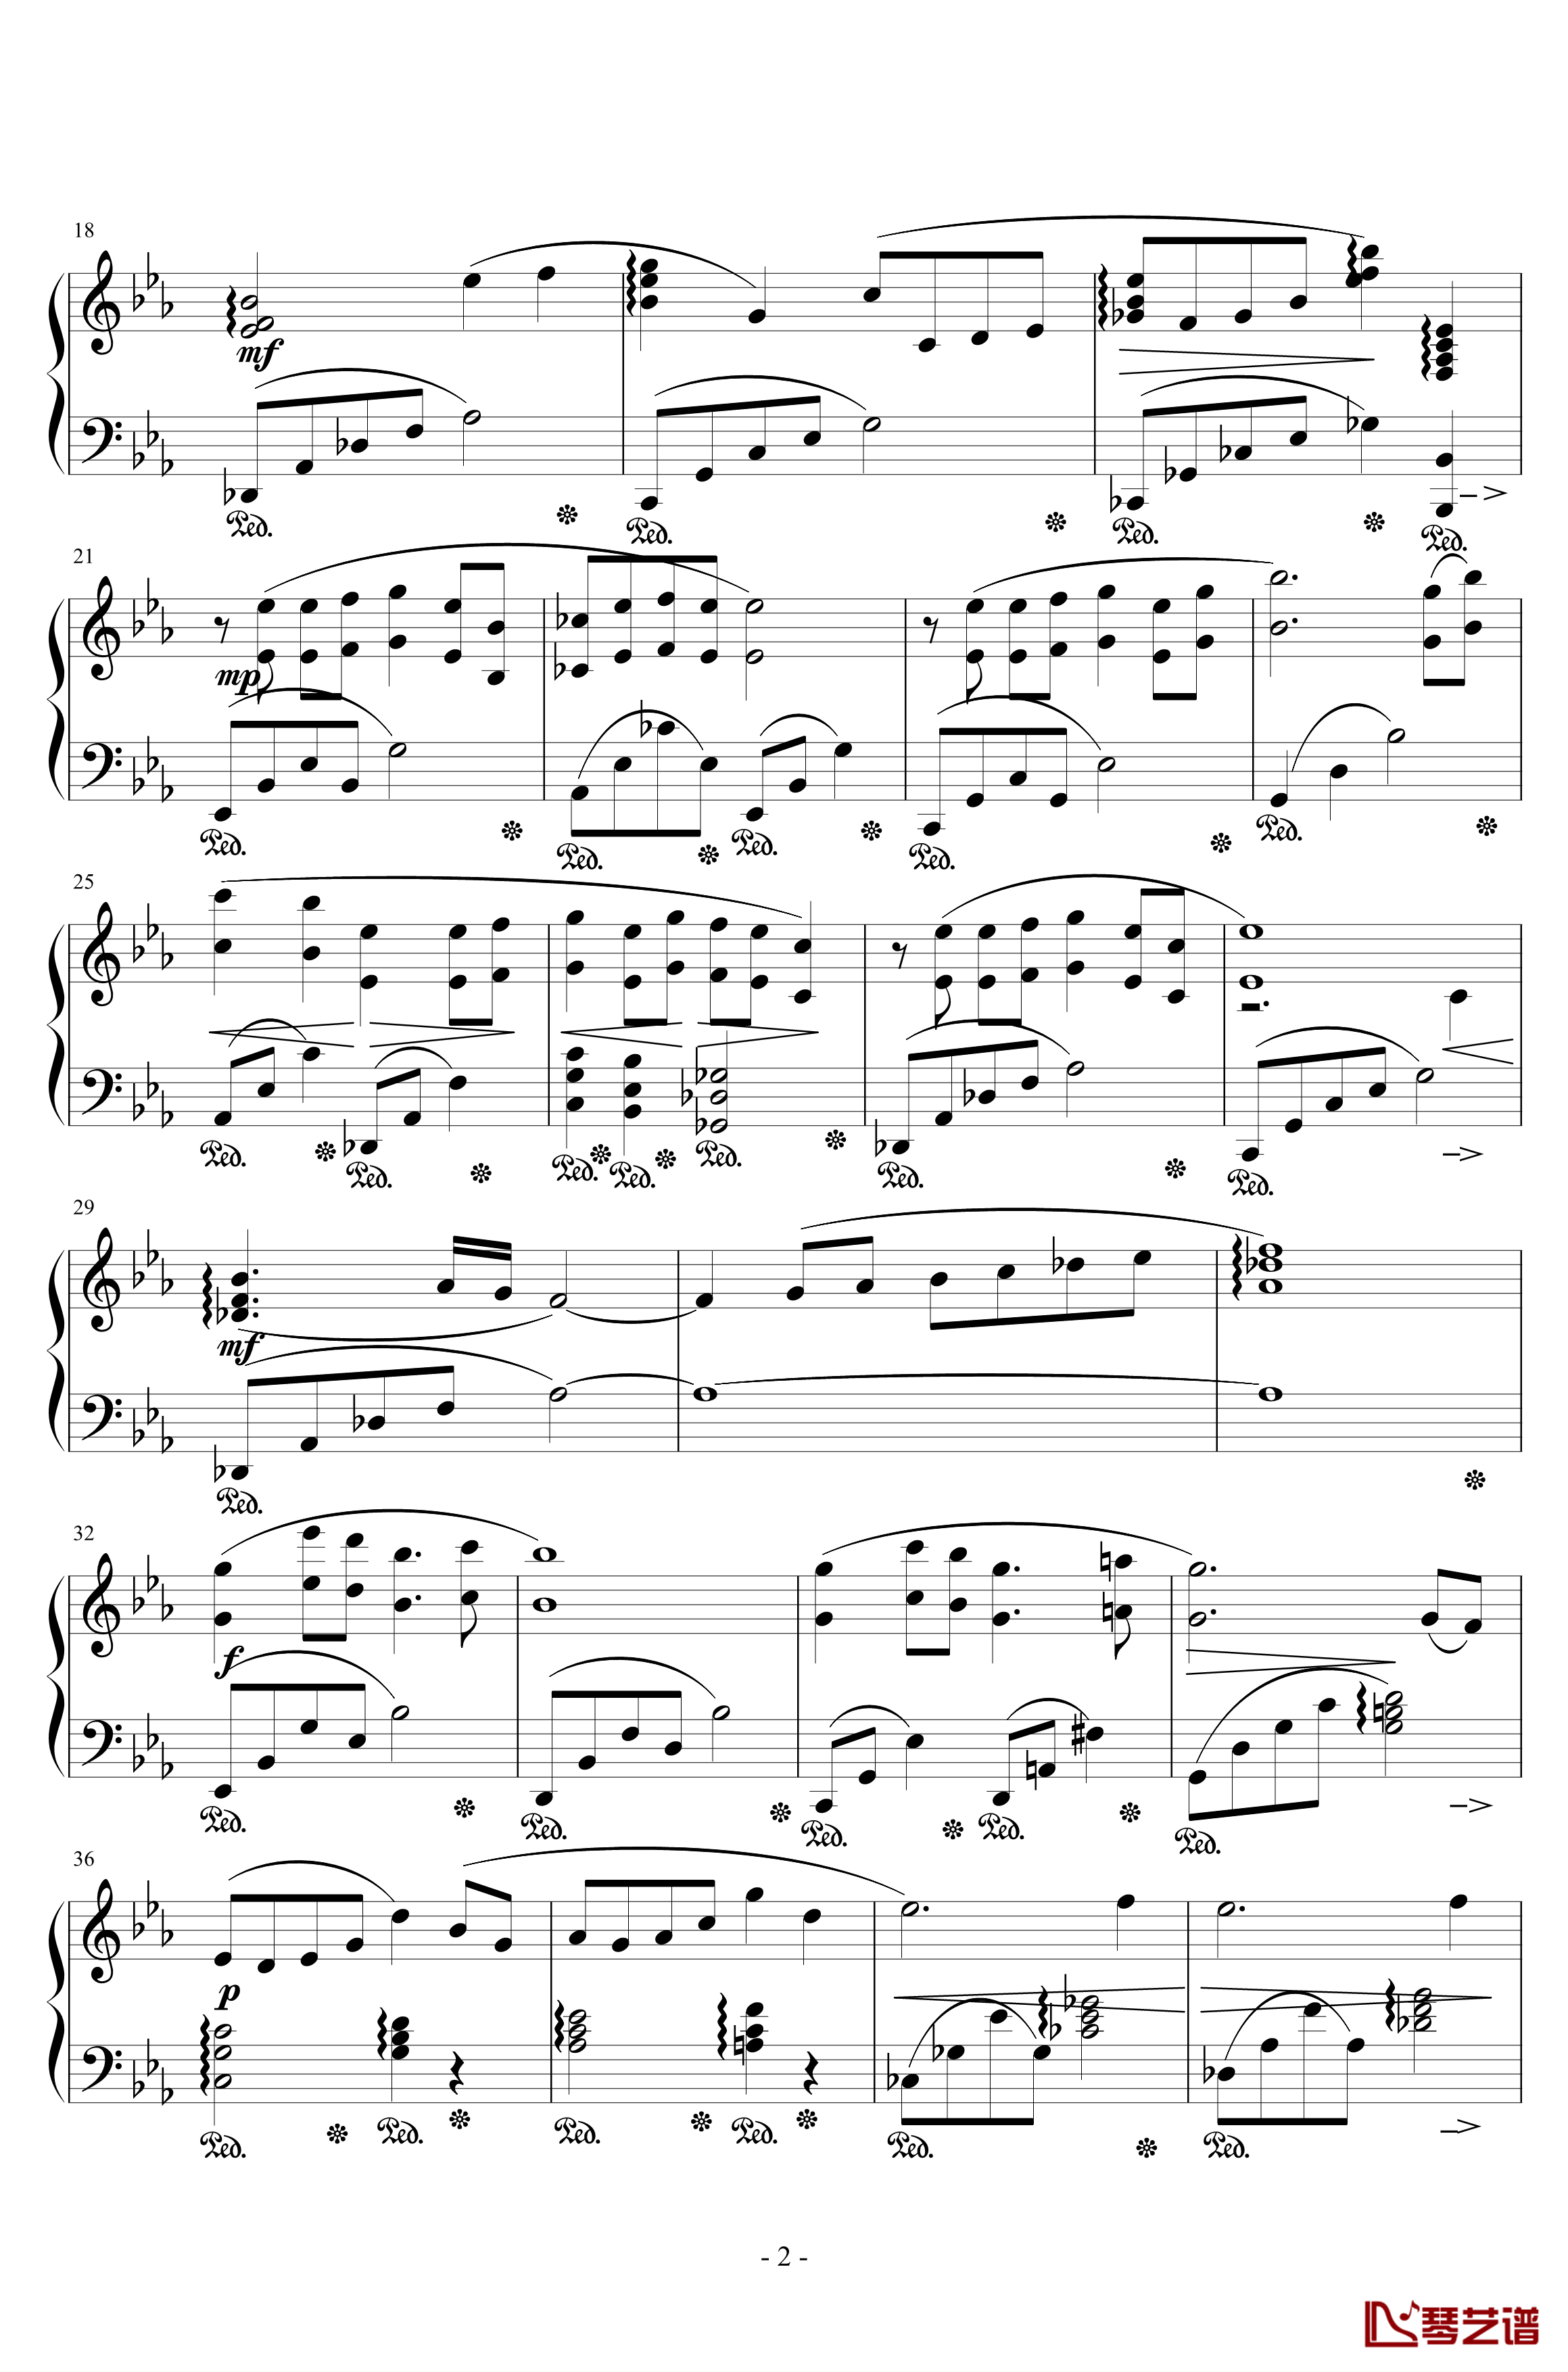 Fisherman's Horizon钢琴谱-交响乐版-最终幻想2